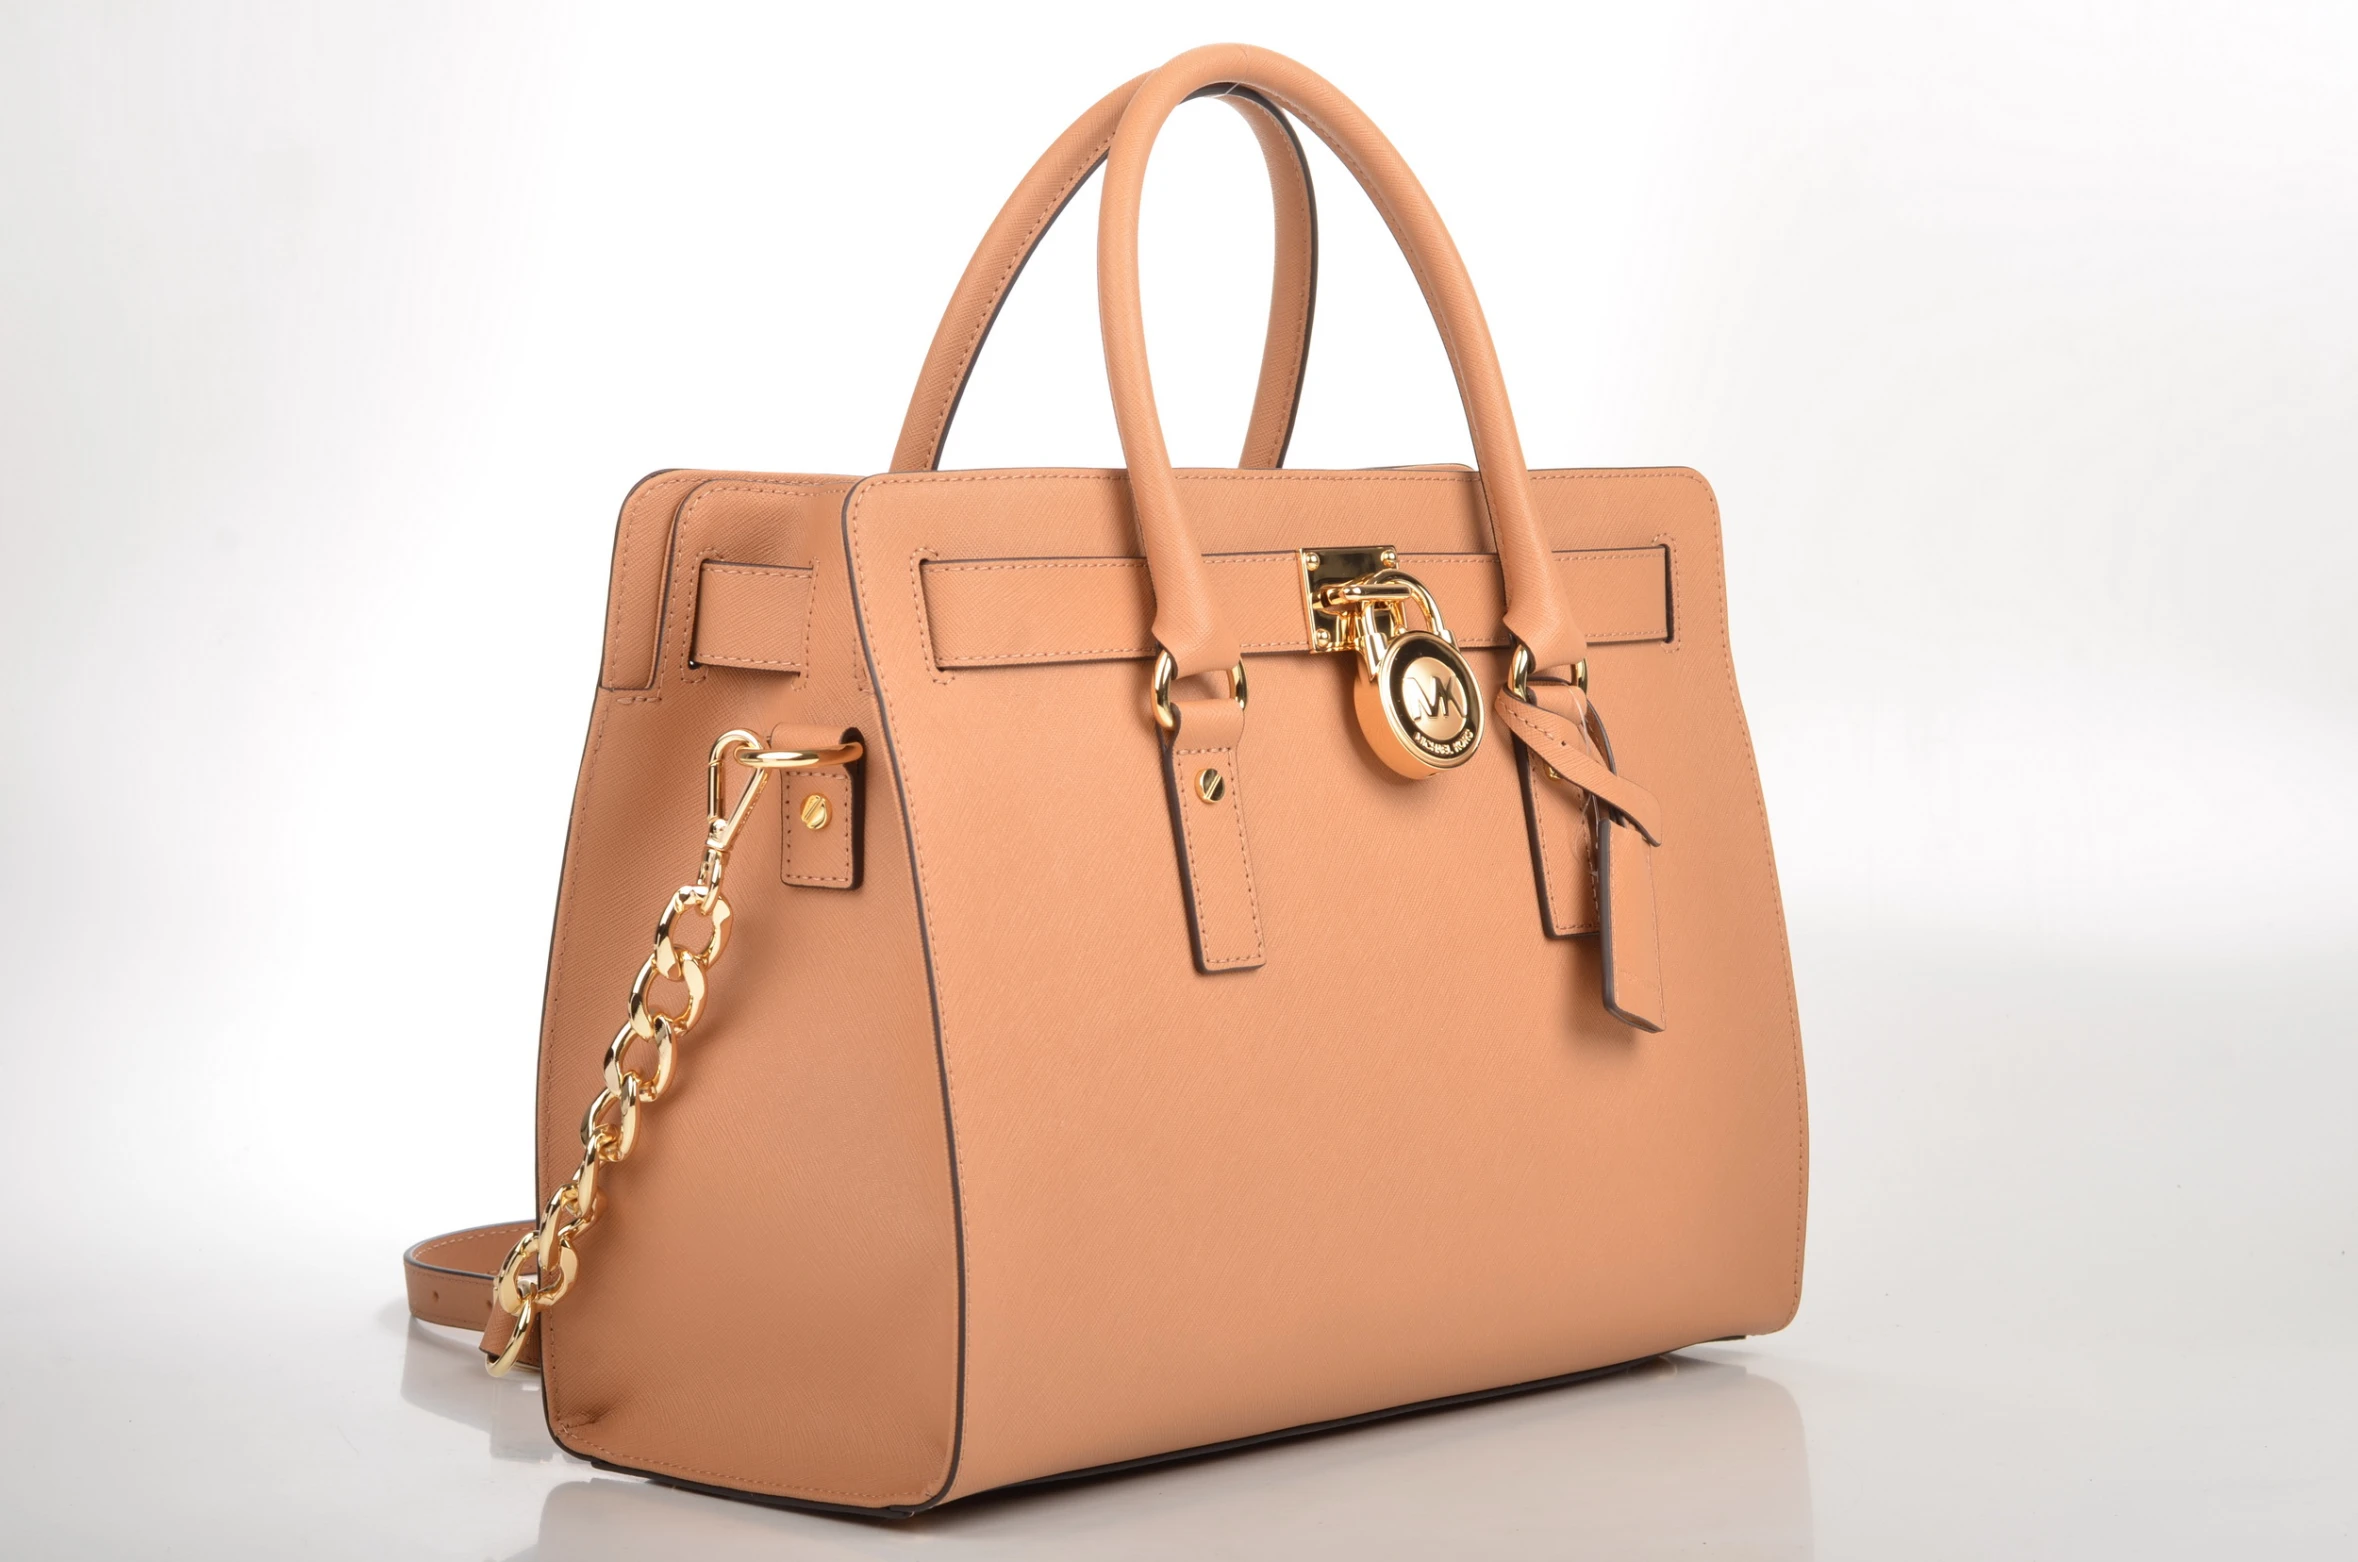 a light brown handbag with golden hardwares